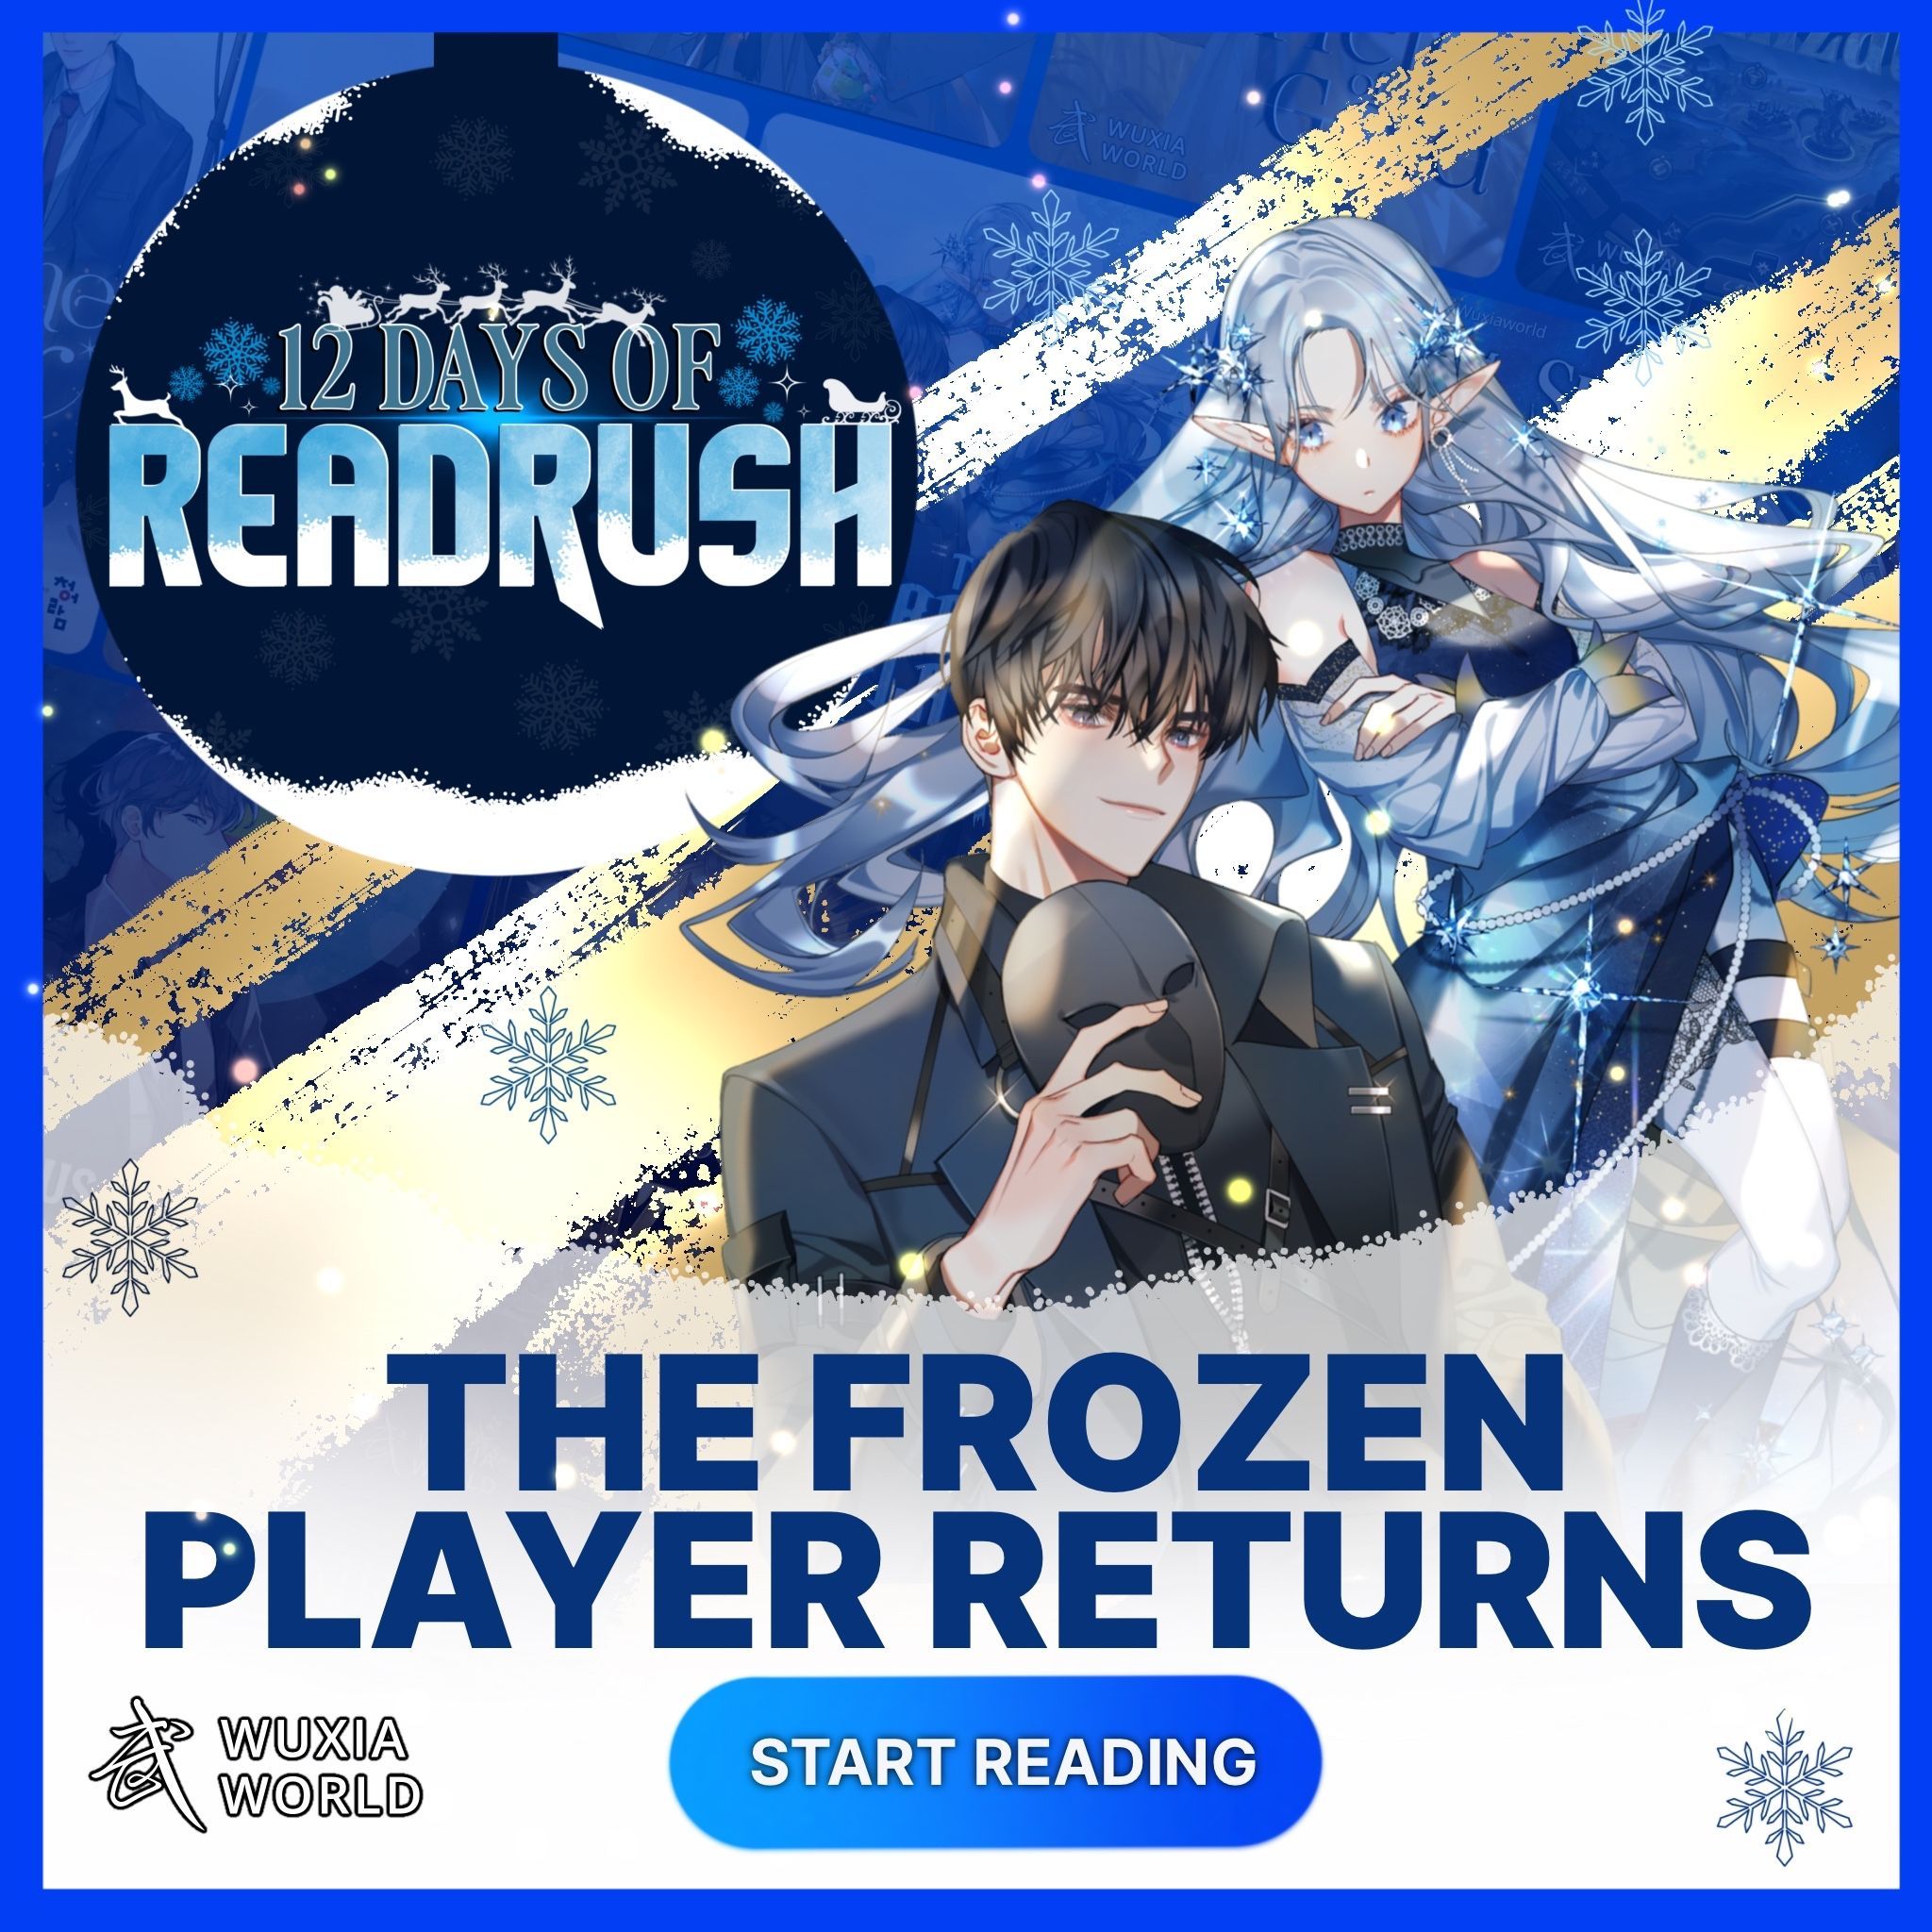 Read Return of the Frozen Player manhwa at MANHWANEW